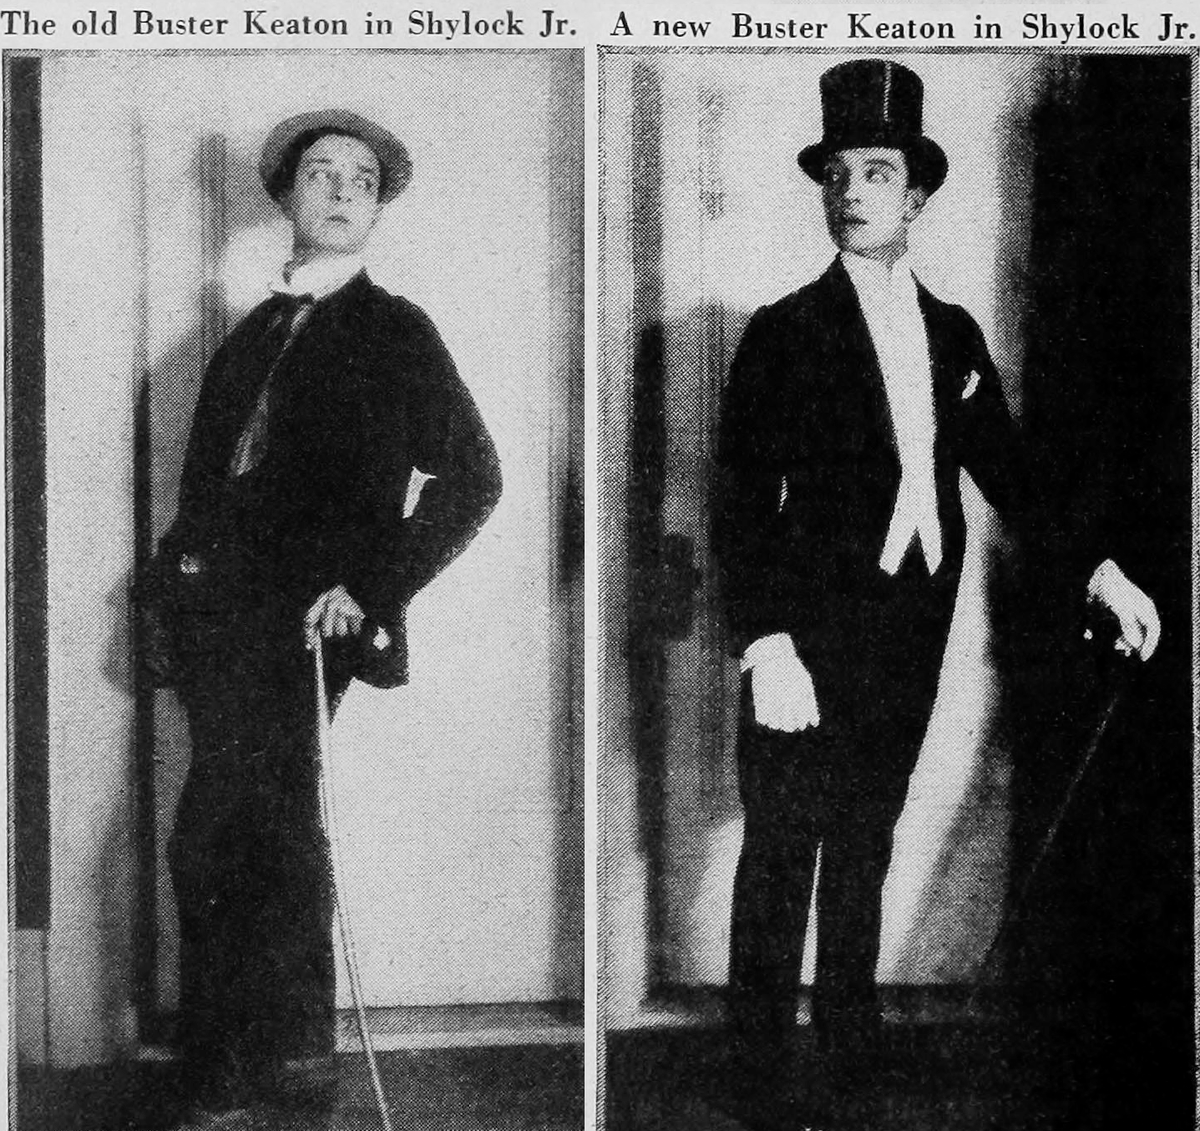 Shylock Jr. 
Motion Picture Magazine

#busterkeaton #damfino #oldhollywood #silentfilms